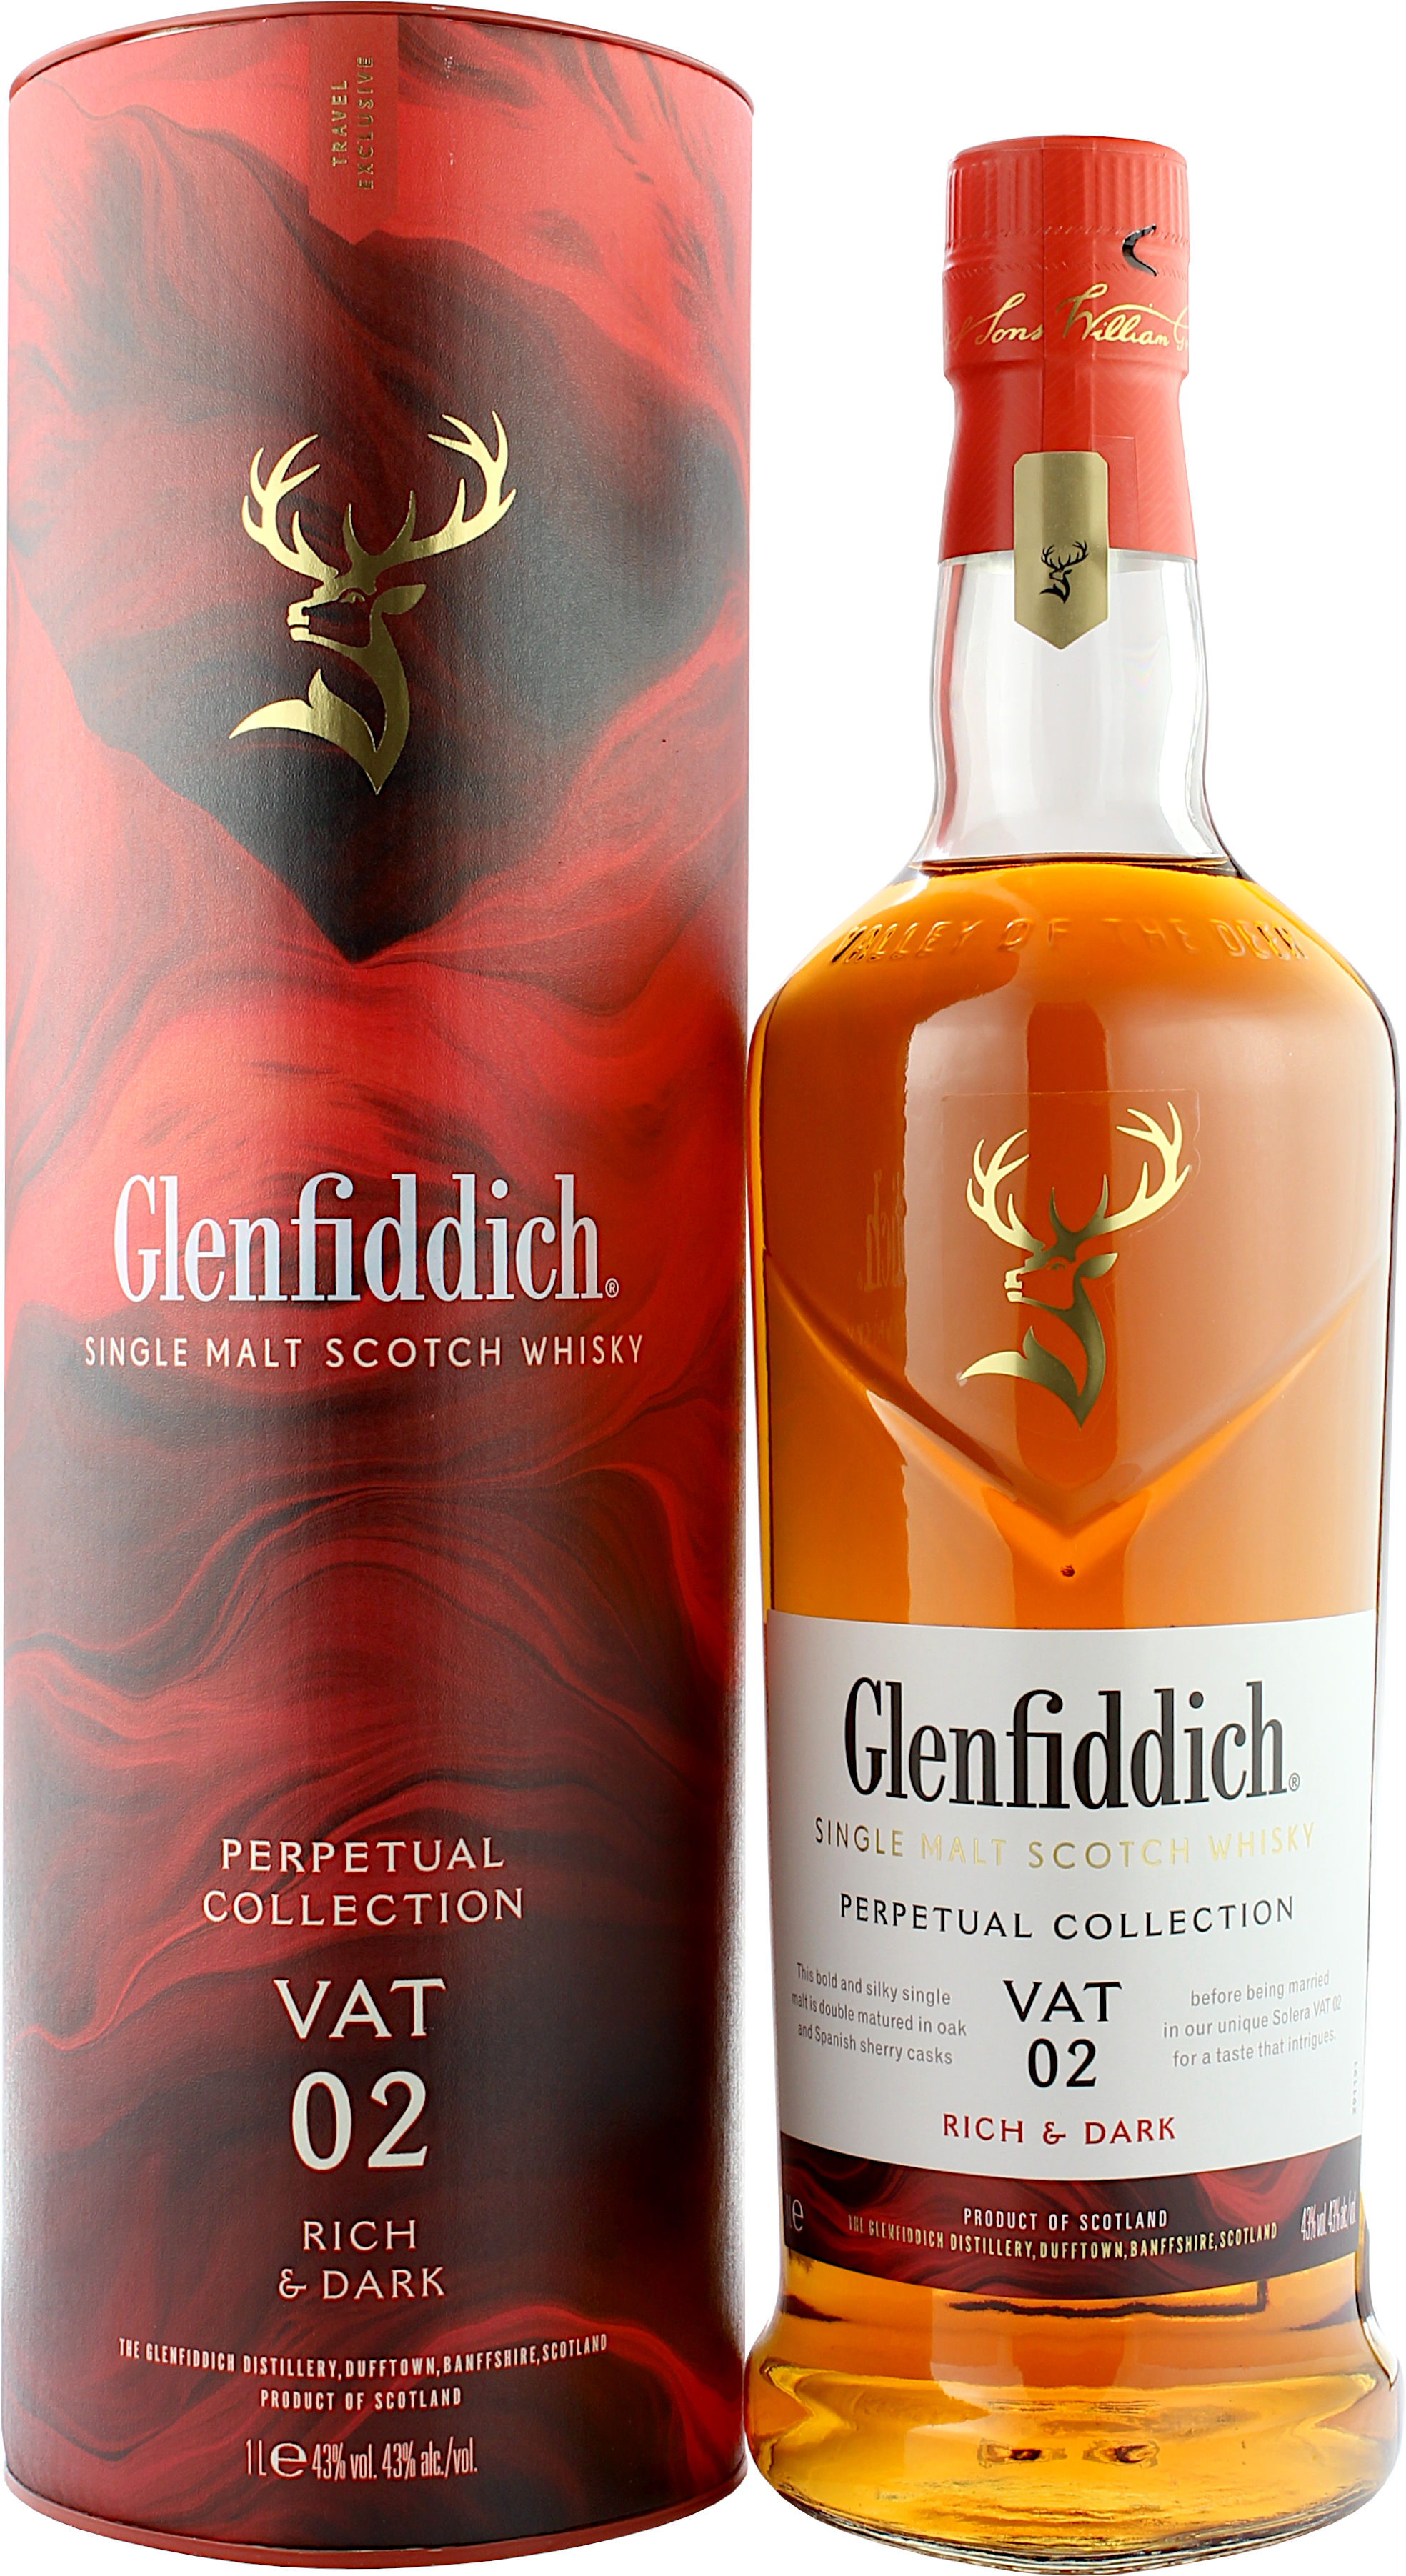 Glenfiddich Perpetual VAT 02 Rich & Dark 43.0% 1 Liter